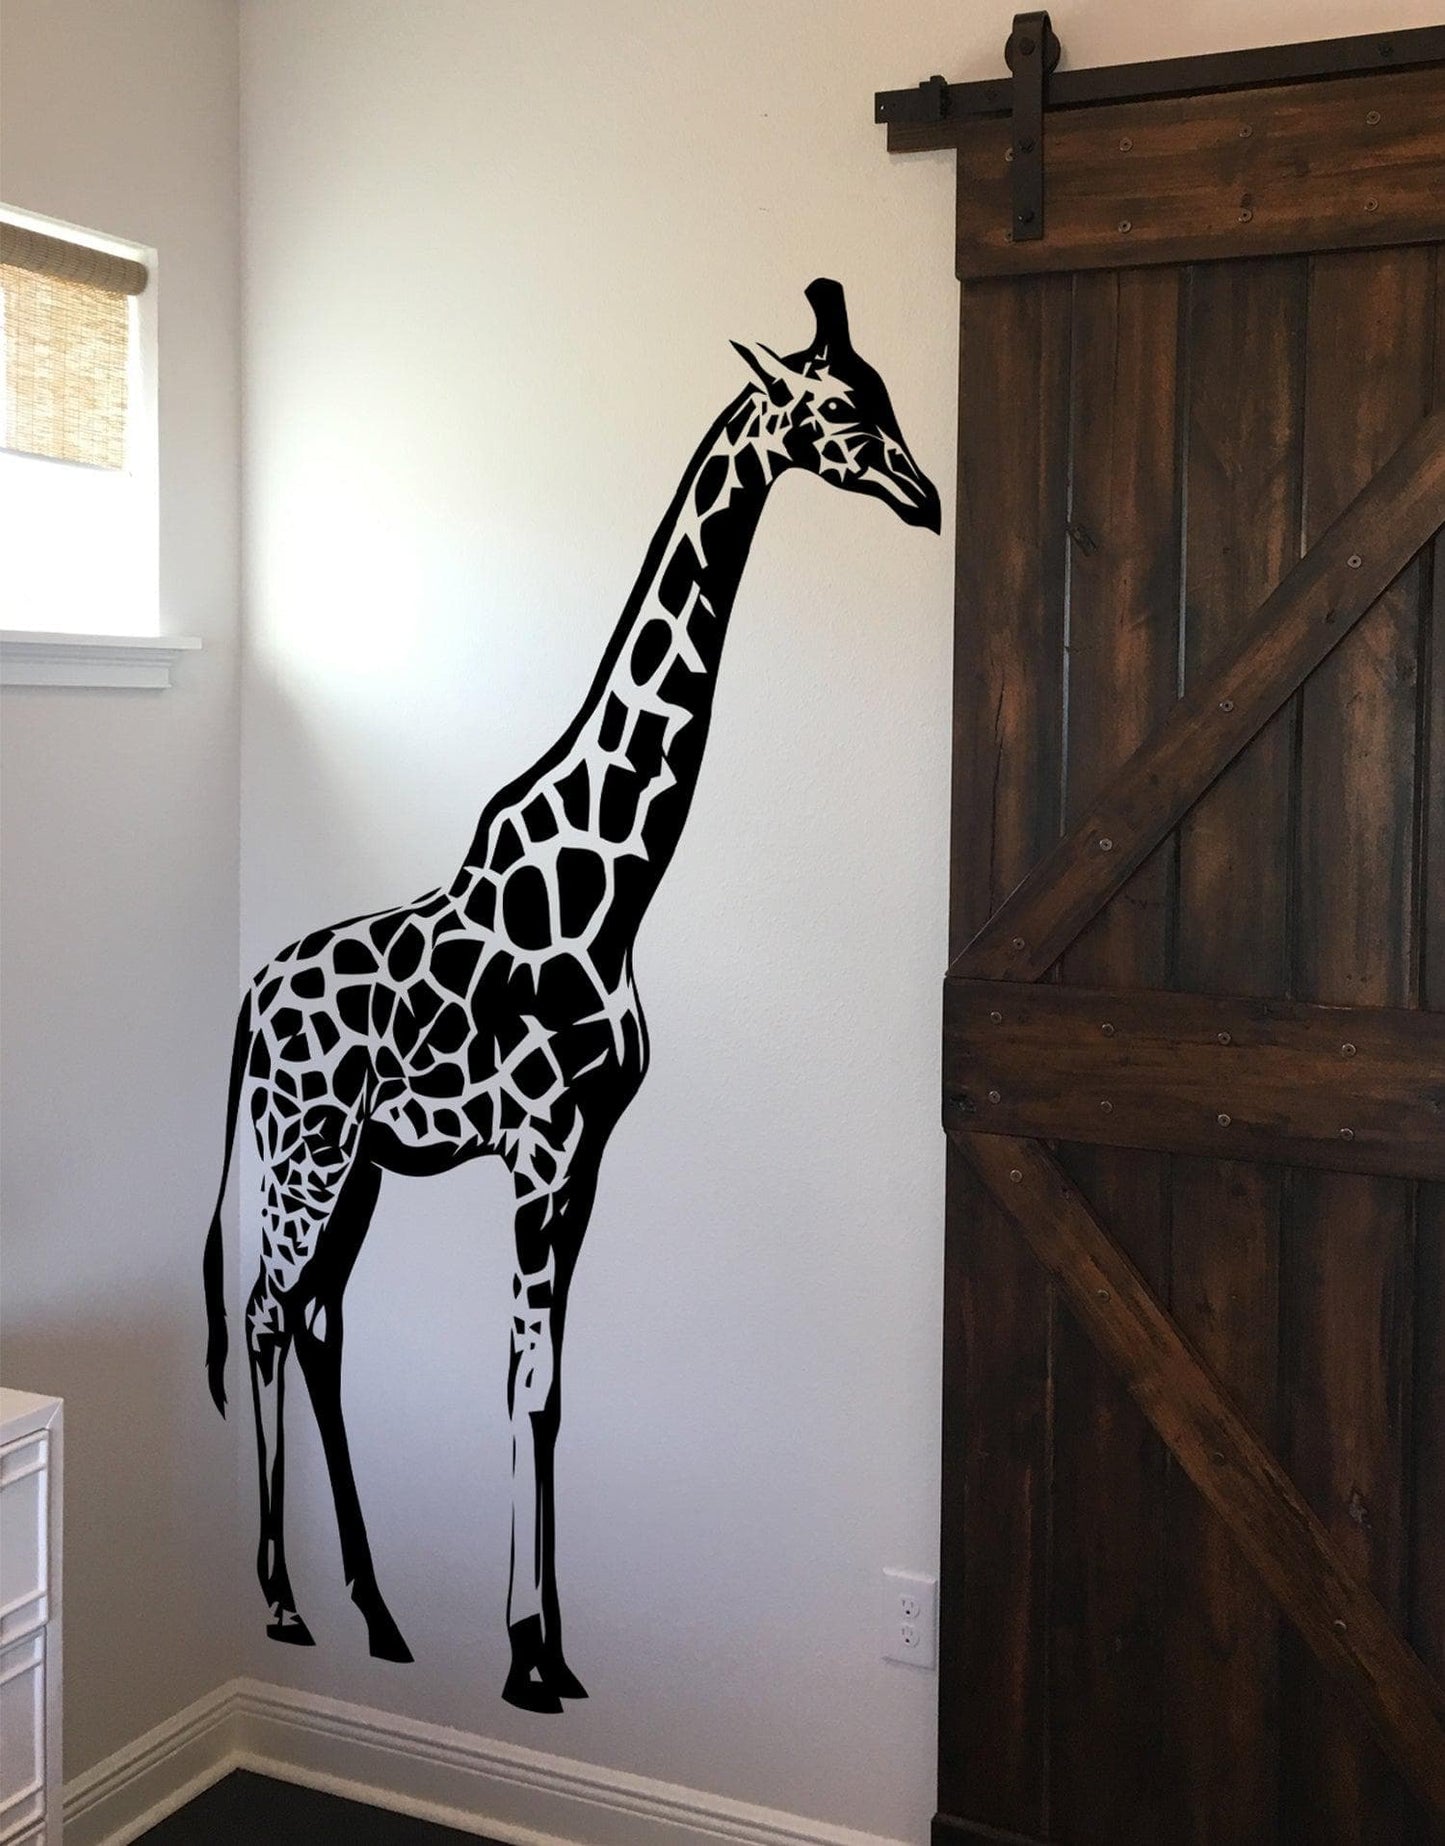 Tall Giraffe Wall Decal for the Nursery Room. #383